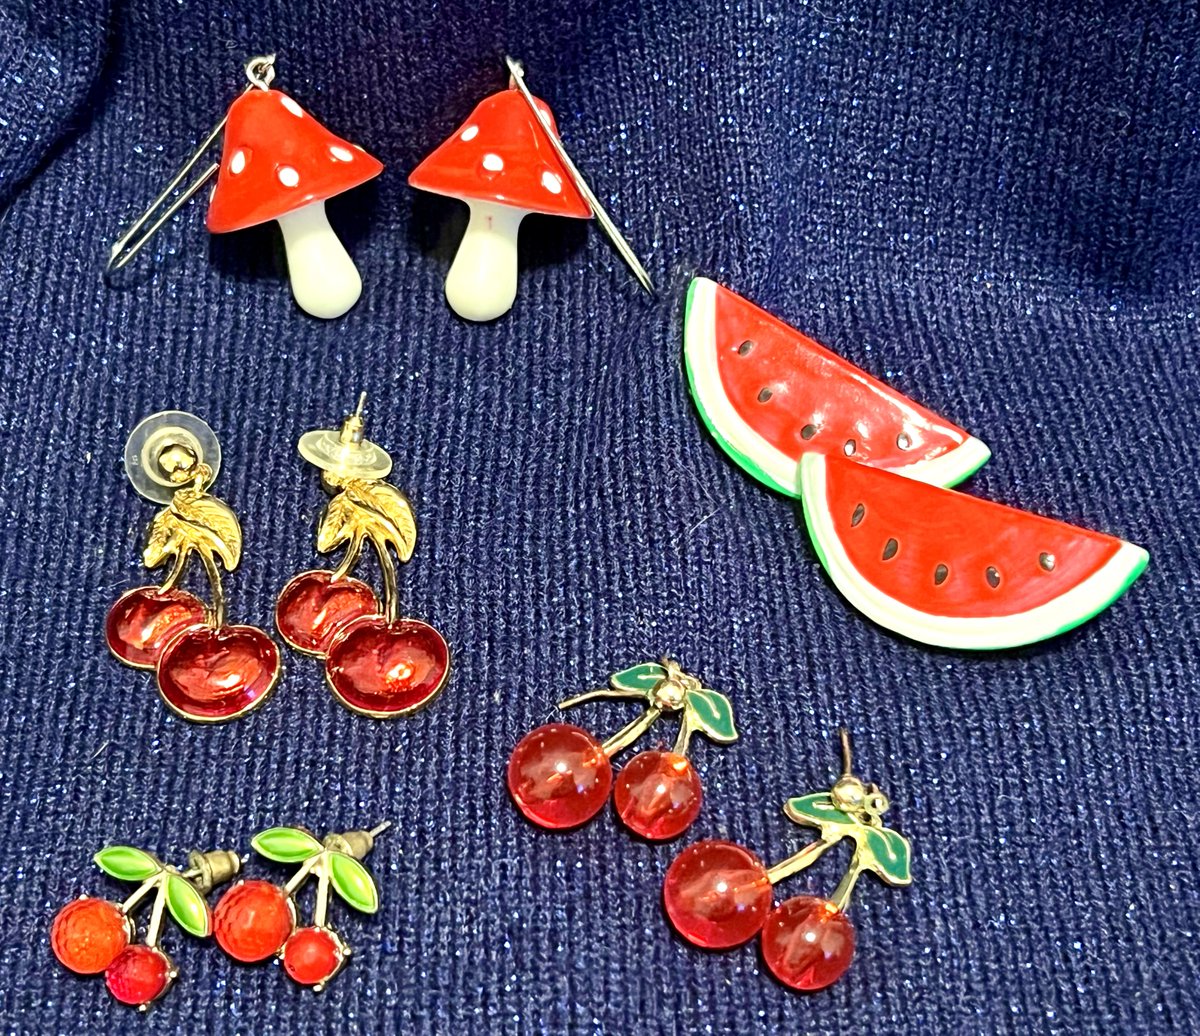 RETRO Fruit Earrings #JewelryLOT Red Enamel #Mushroom #Cherry #Watermelon 5 Pair Pierced FREE SHIP
#vintageearrings #vintagejewelry #fruitsalad #mushroomearrings #cherries #enameljewelry #funfashion #accessories #giftable #uniquegift #ebaylots #ebayfinds

 ebay.com/itm/2665311793…